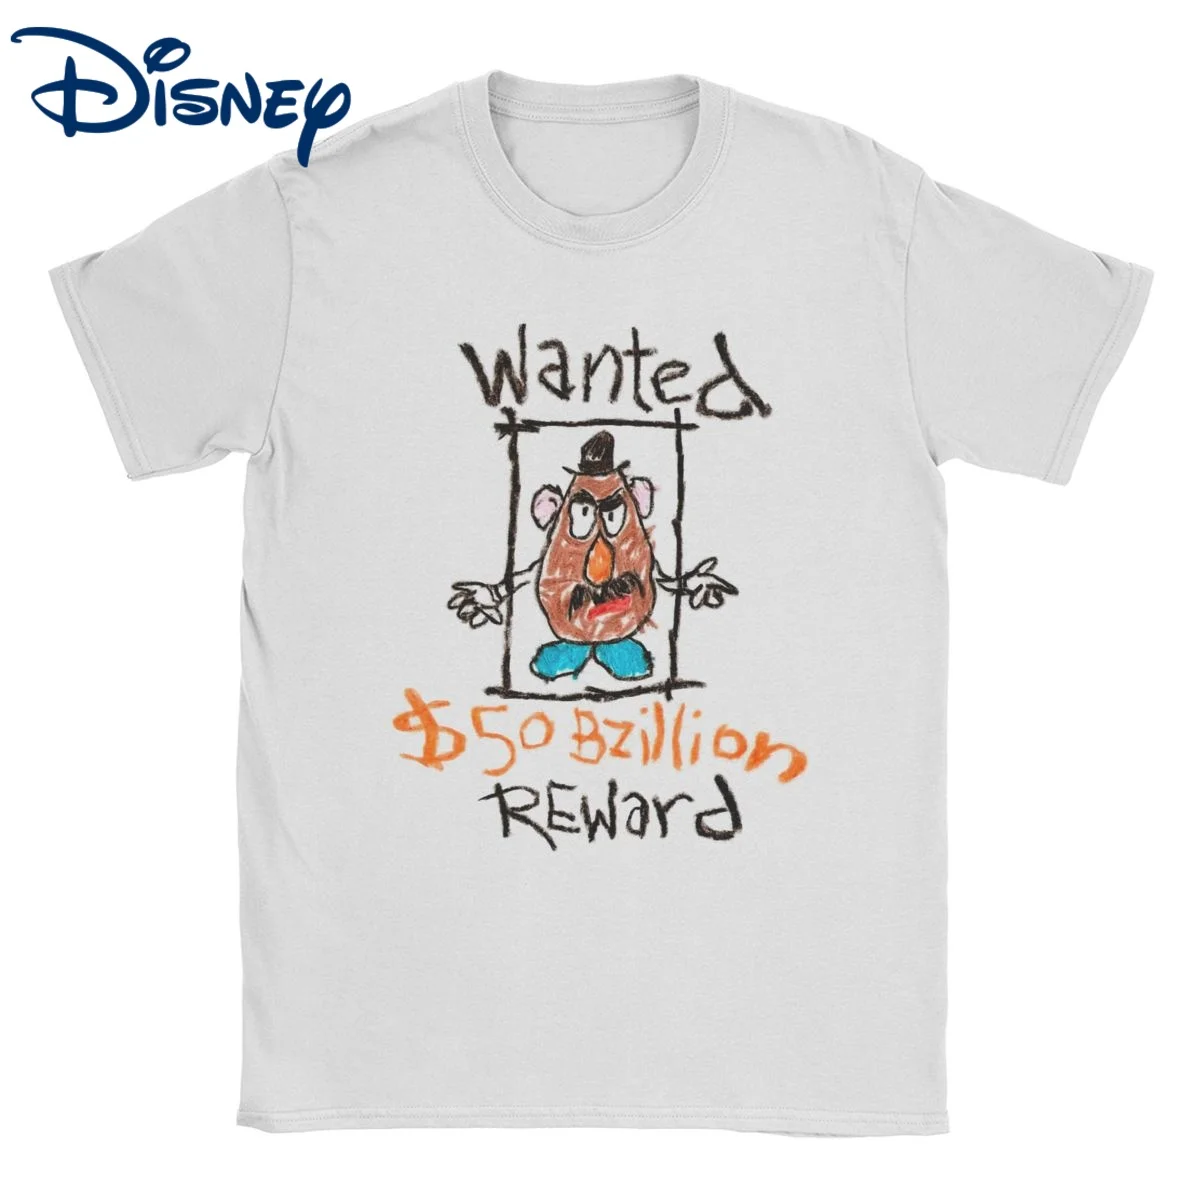 

Wanted Mr Potato Toy Story T Shirts Men Women's 100% Cotton Humorous T-Shirt Disney Tee Shirt Short Sleeve Clothes Plus Size